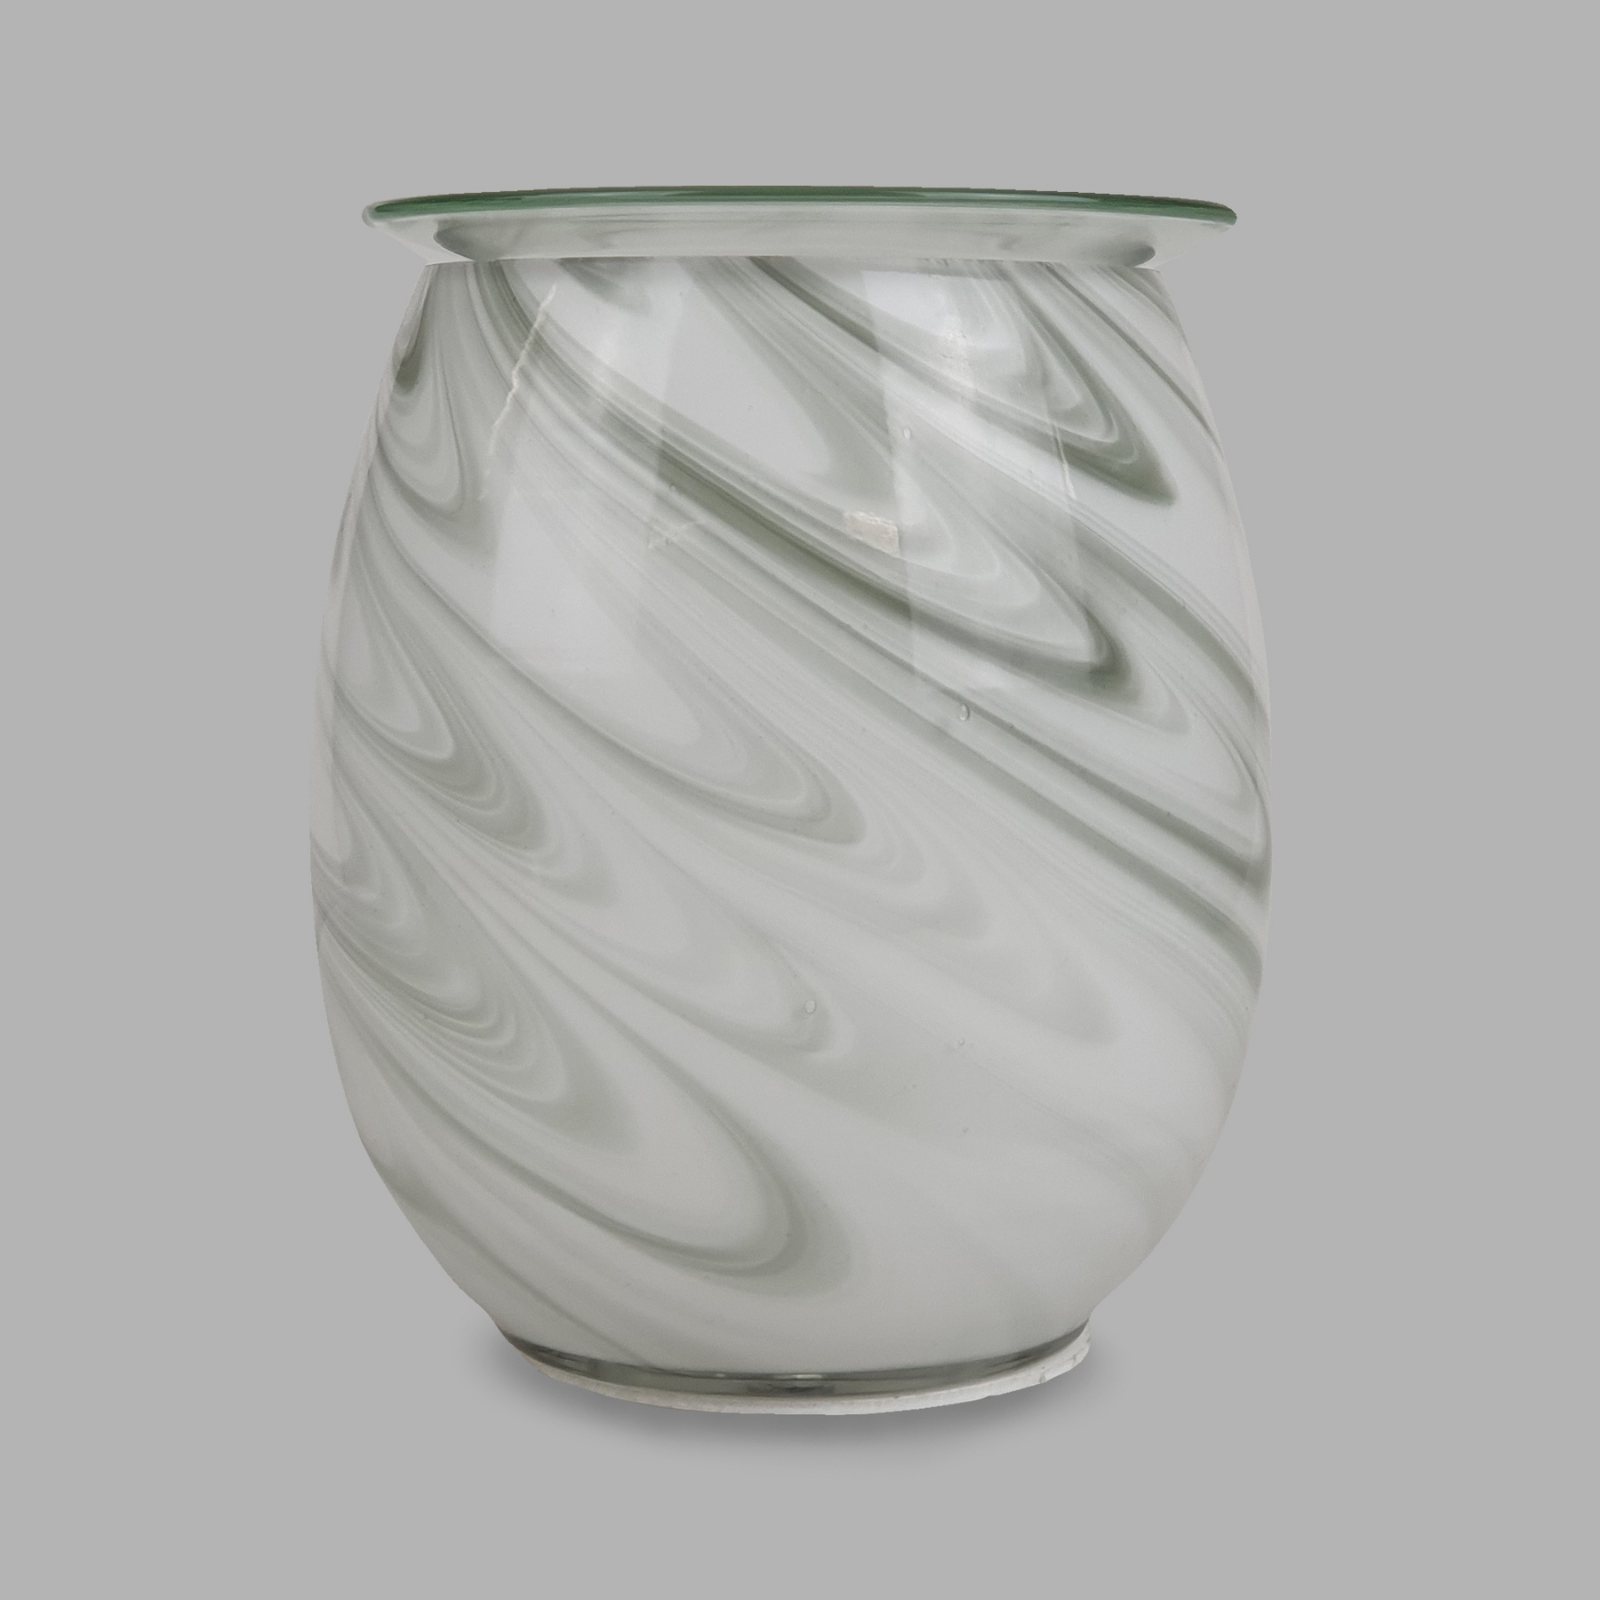 Electric Wax Burner Art Glass - Galaxy Swirl